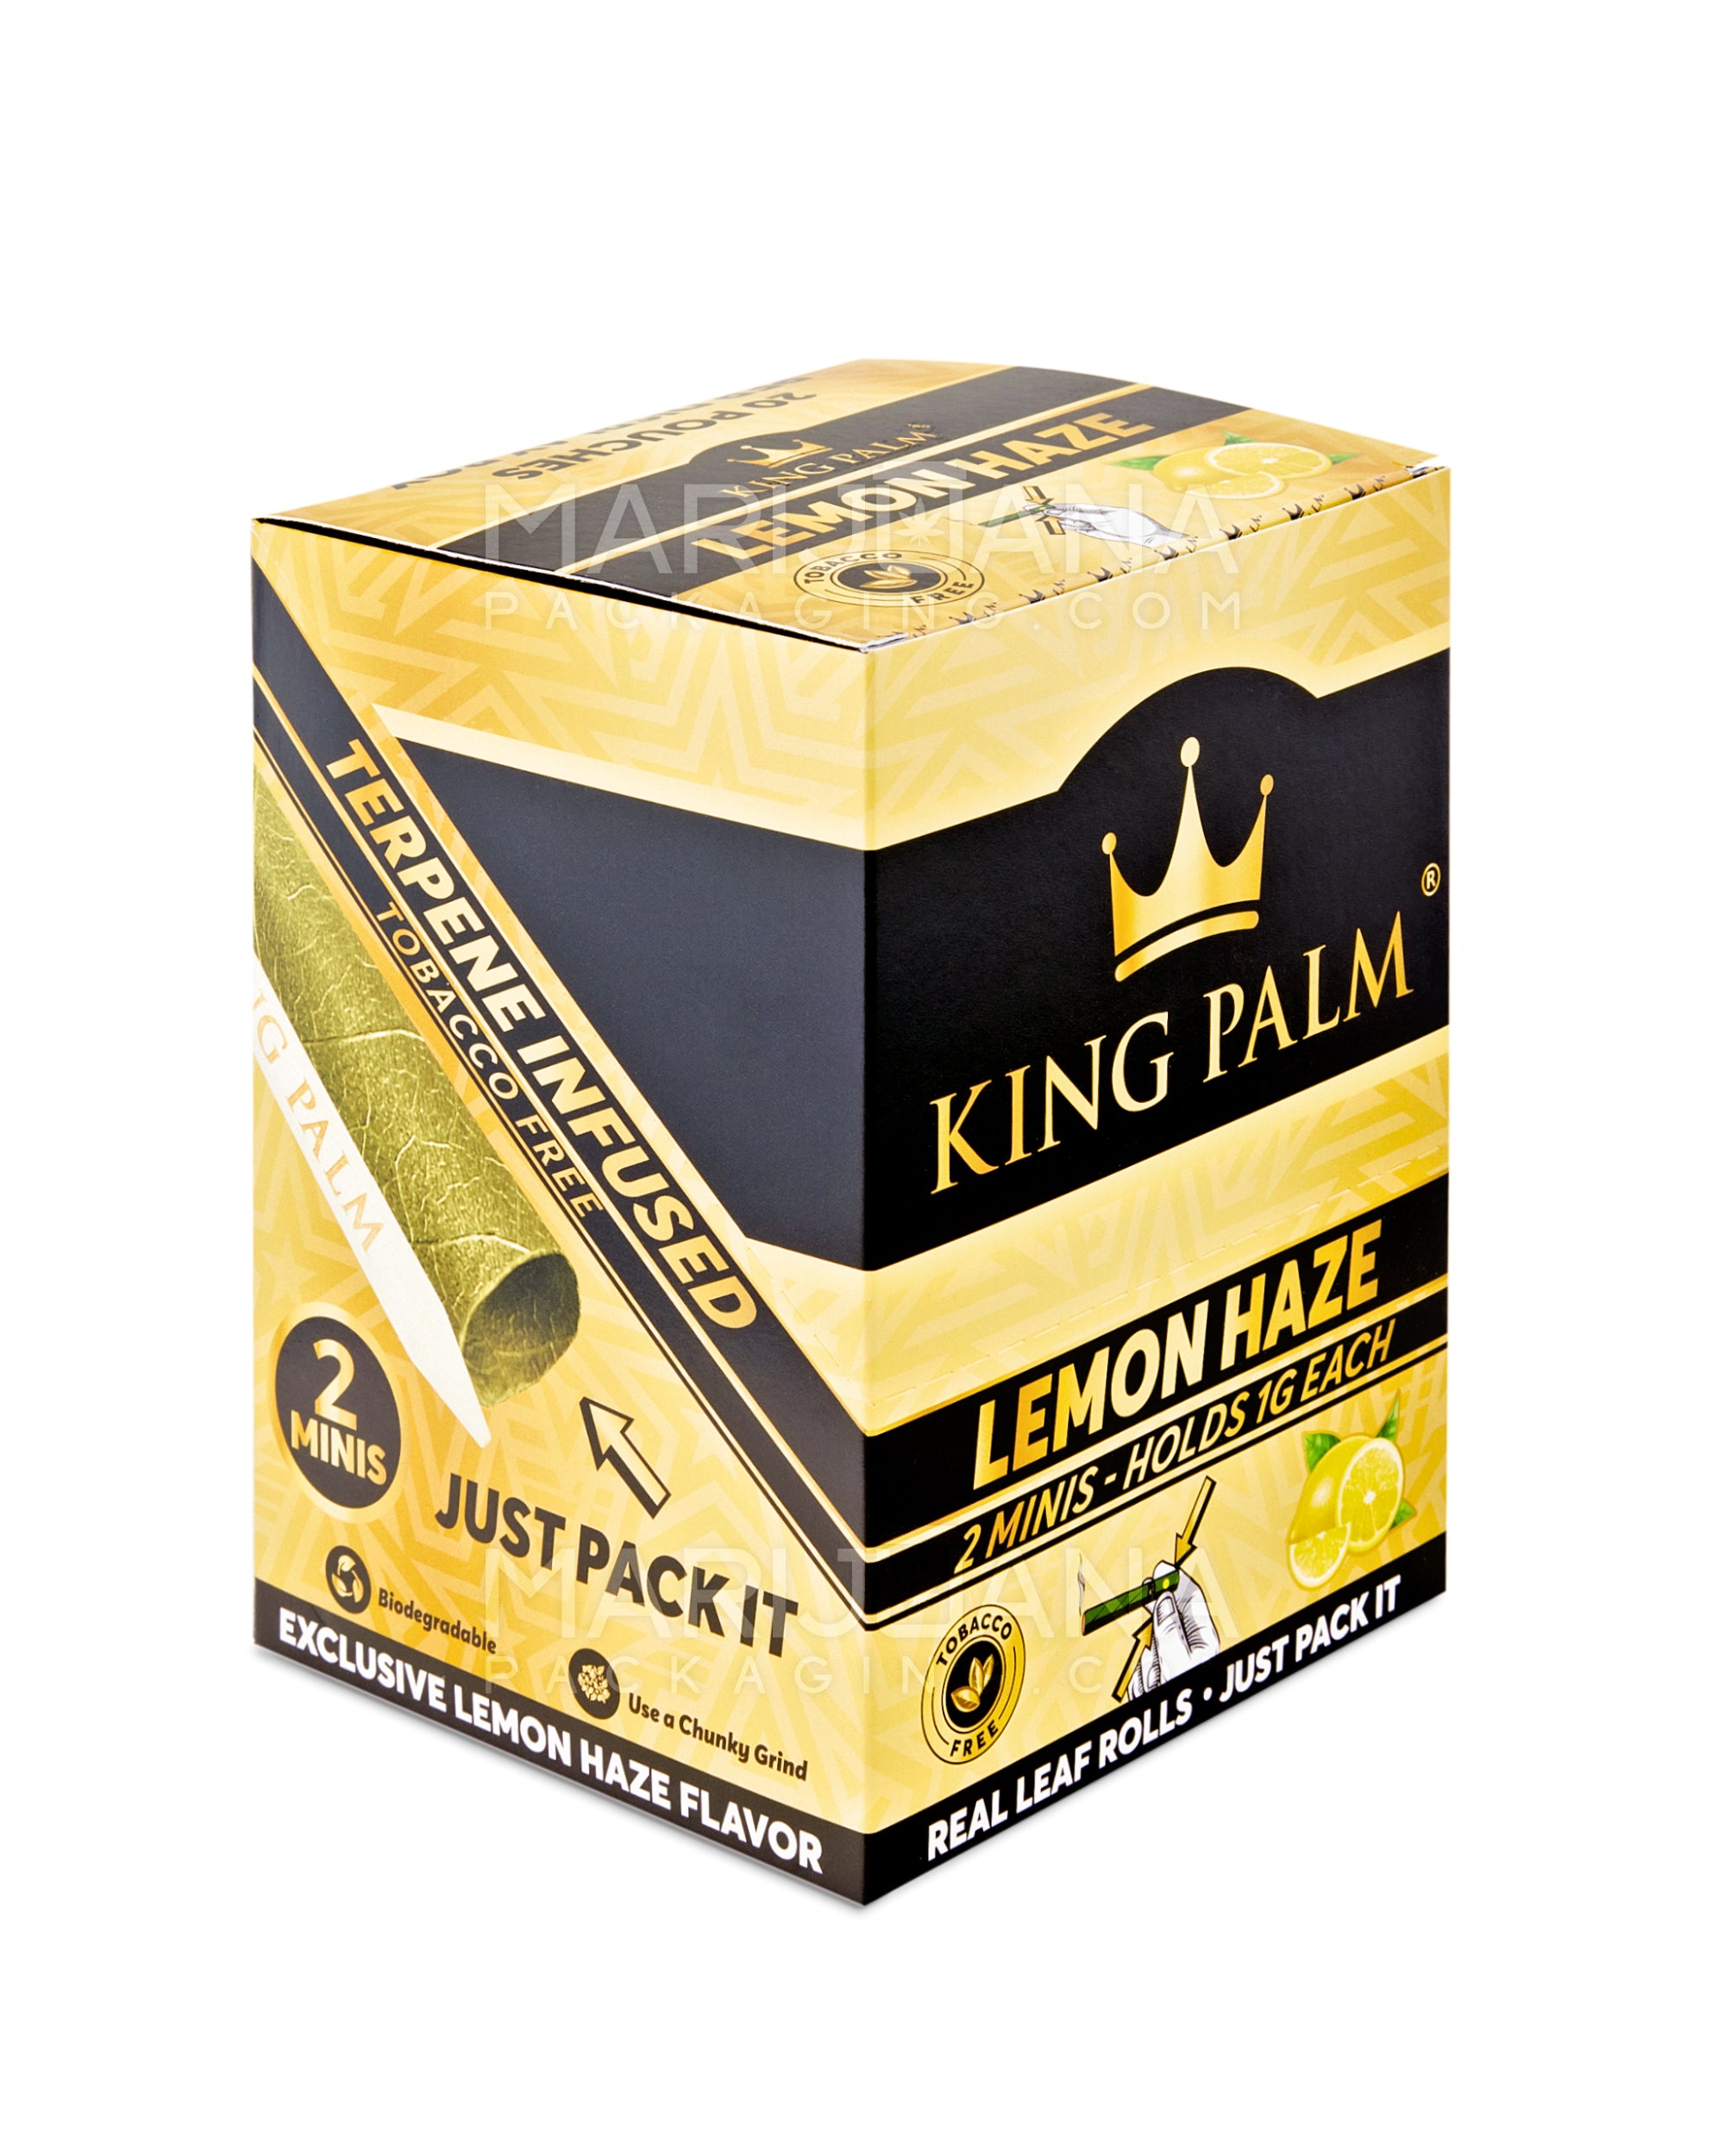 KING PALM | 'Retail Display' Mini Green Natural Leaf Blunt Wraps | 84mm - Lemon Haze - 20 Count - 2